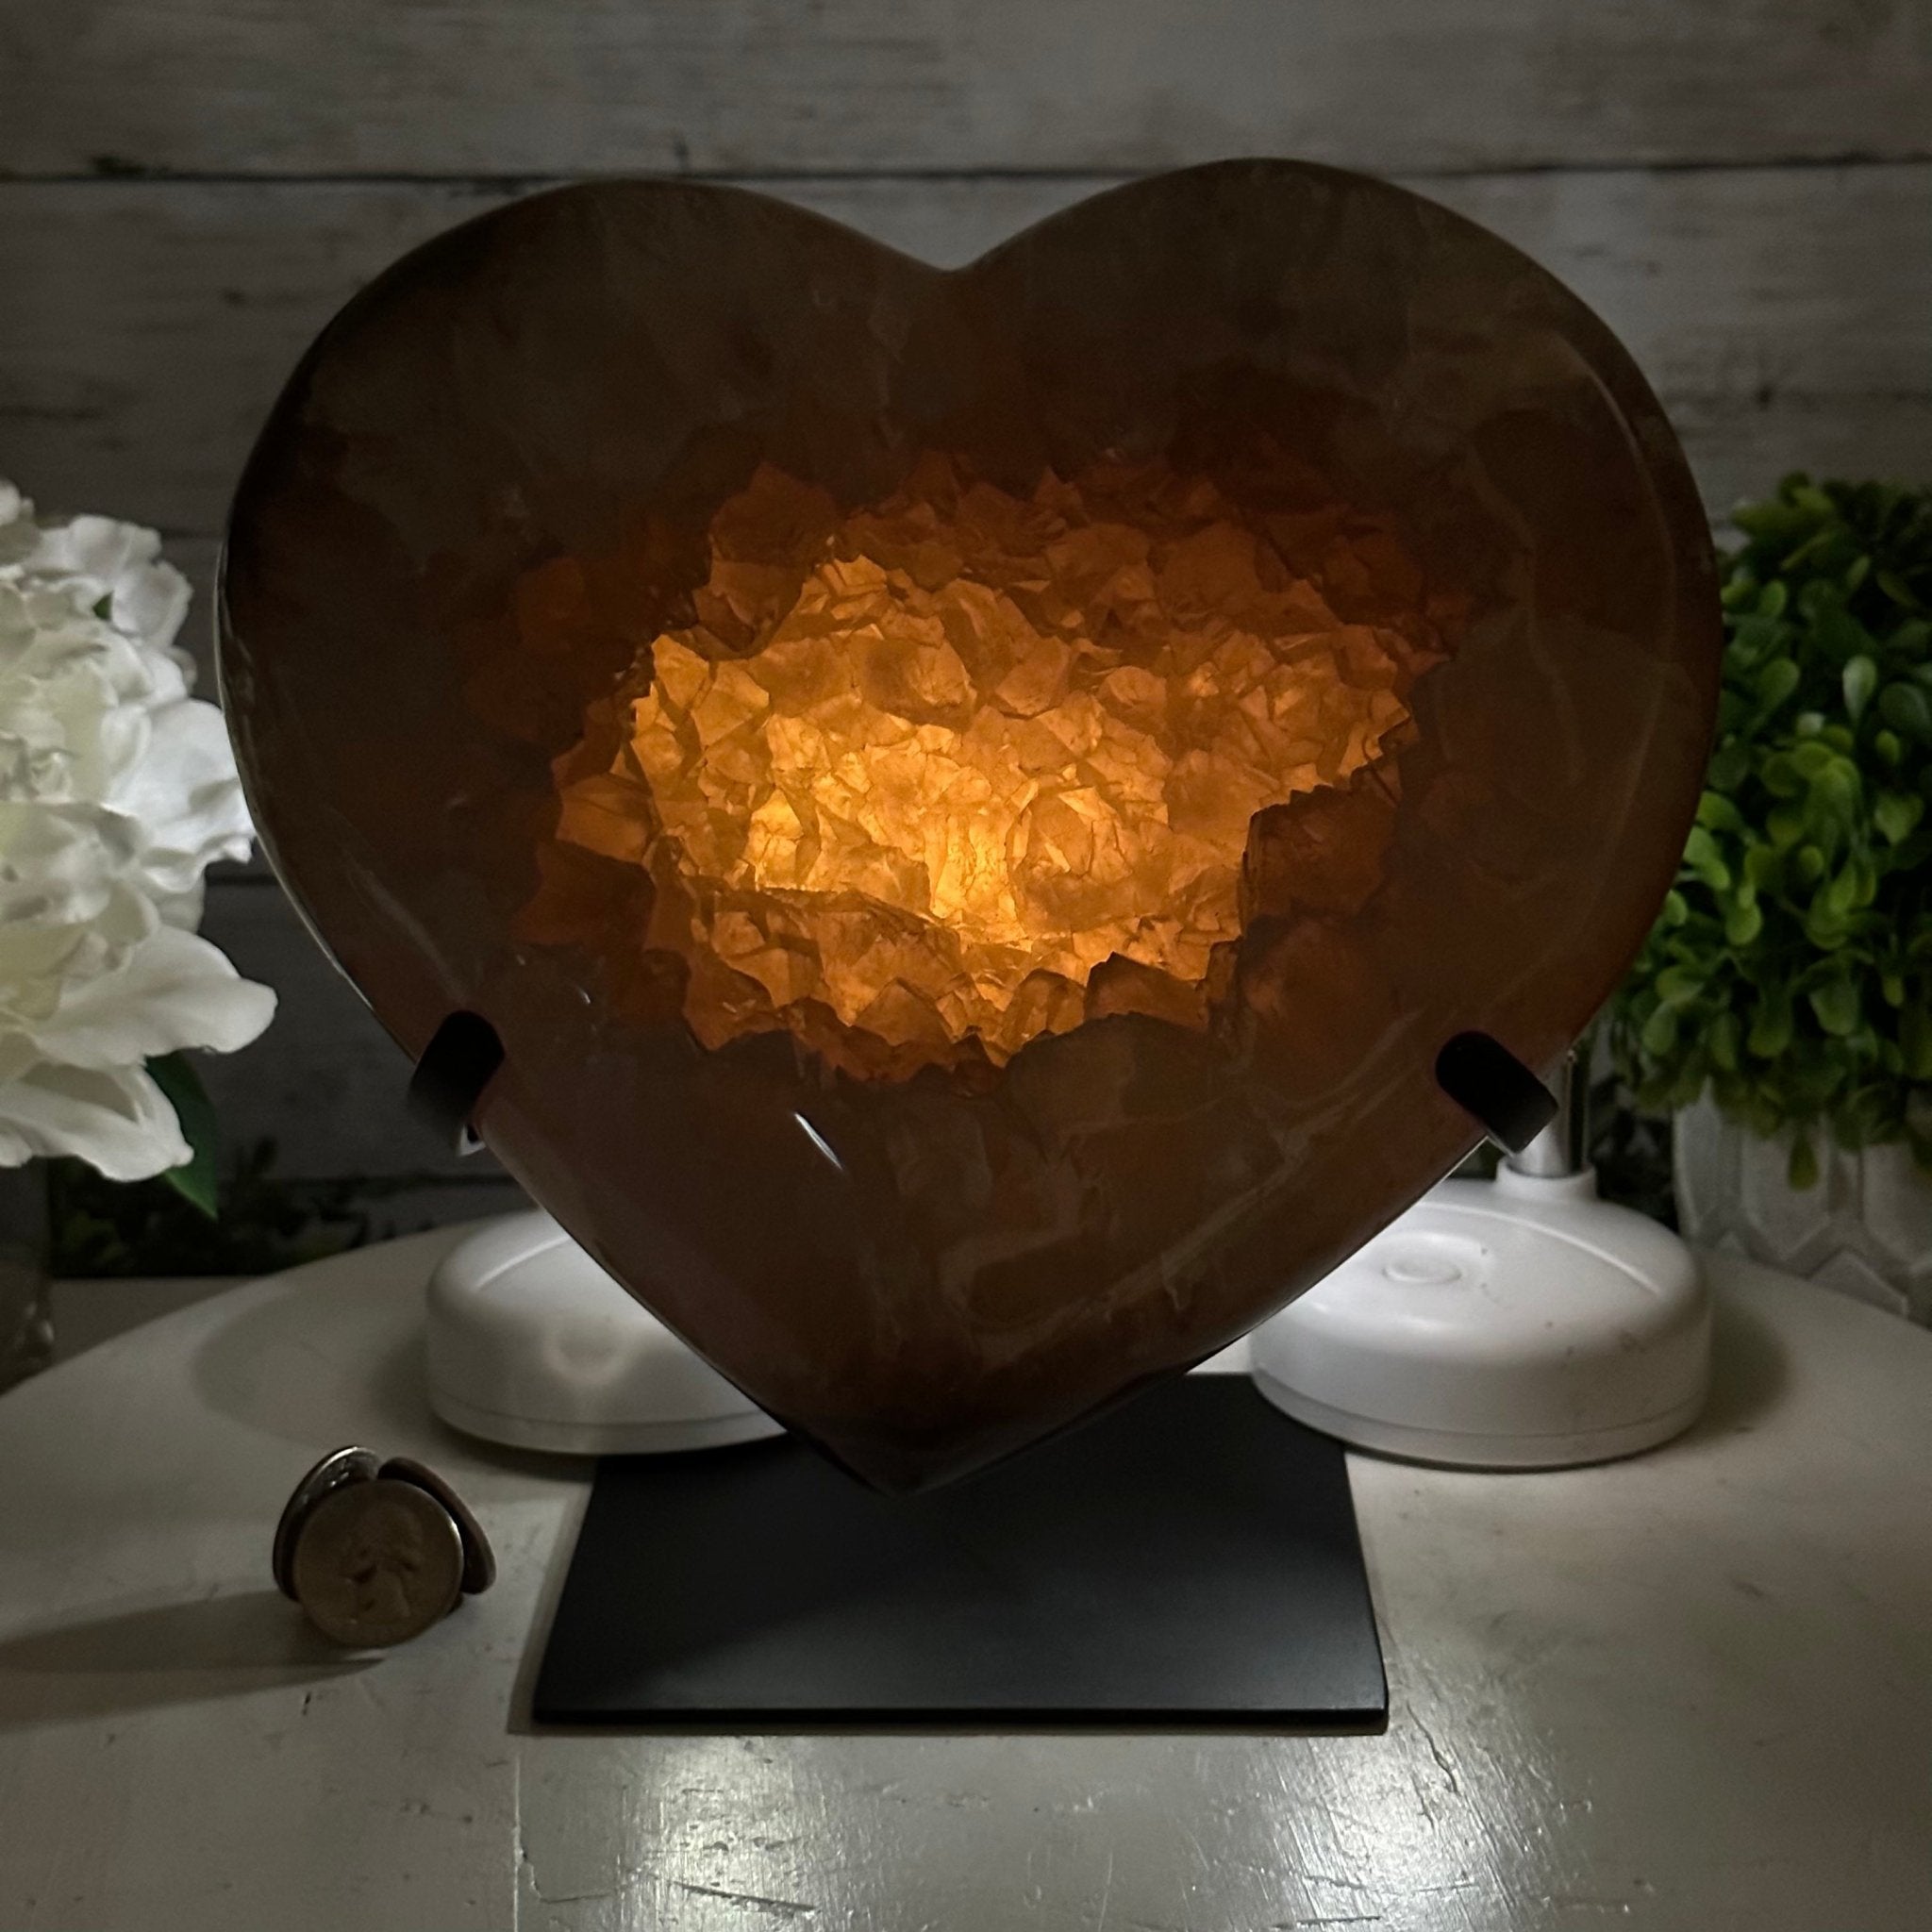 Polished Agate Heart Geode on a Metal Stand, 9.5 lbs & 8.3" Tall, Model #5468-0083 by Brazil Gems - Brazil GemsBrazil GemsPolished Agate Heart Geode on a Metal Stand, 9.5 lbs & 8.3" Tall, Model #5468-0083 by Brazil GemsHearts5468-0083